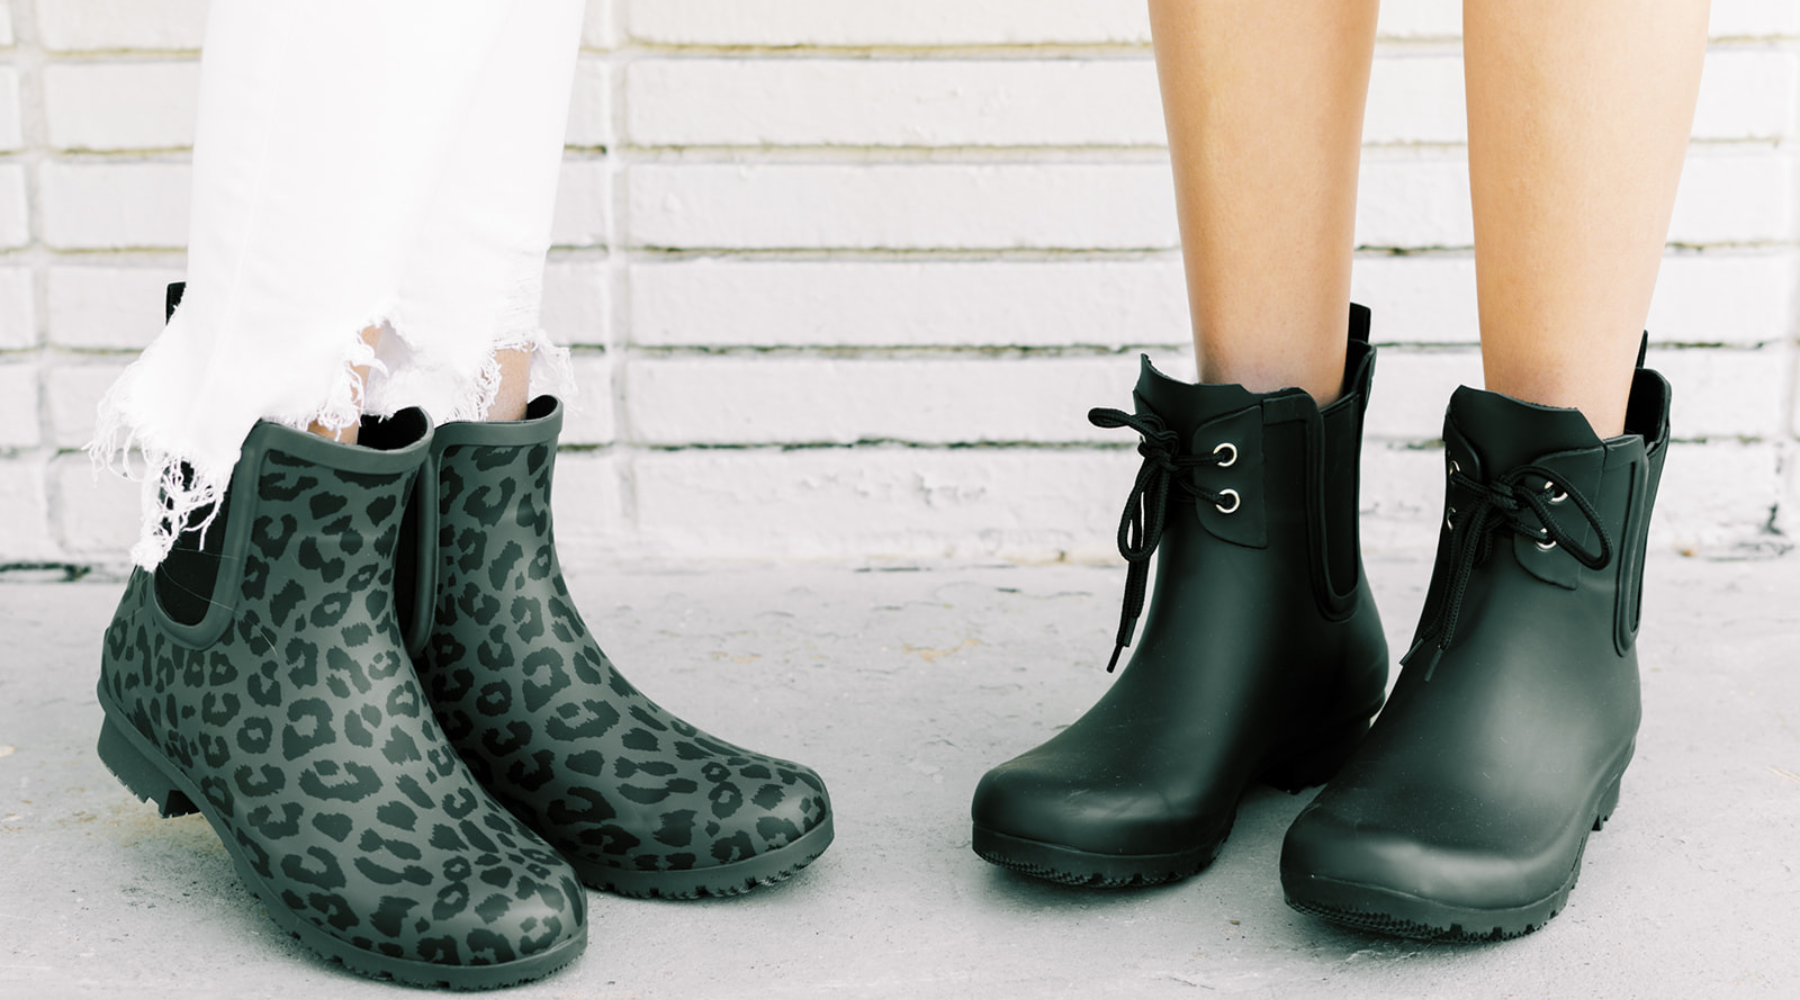 America's Favorite Rain Boots – ROMA BOOTS